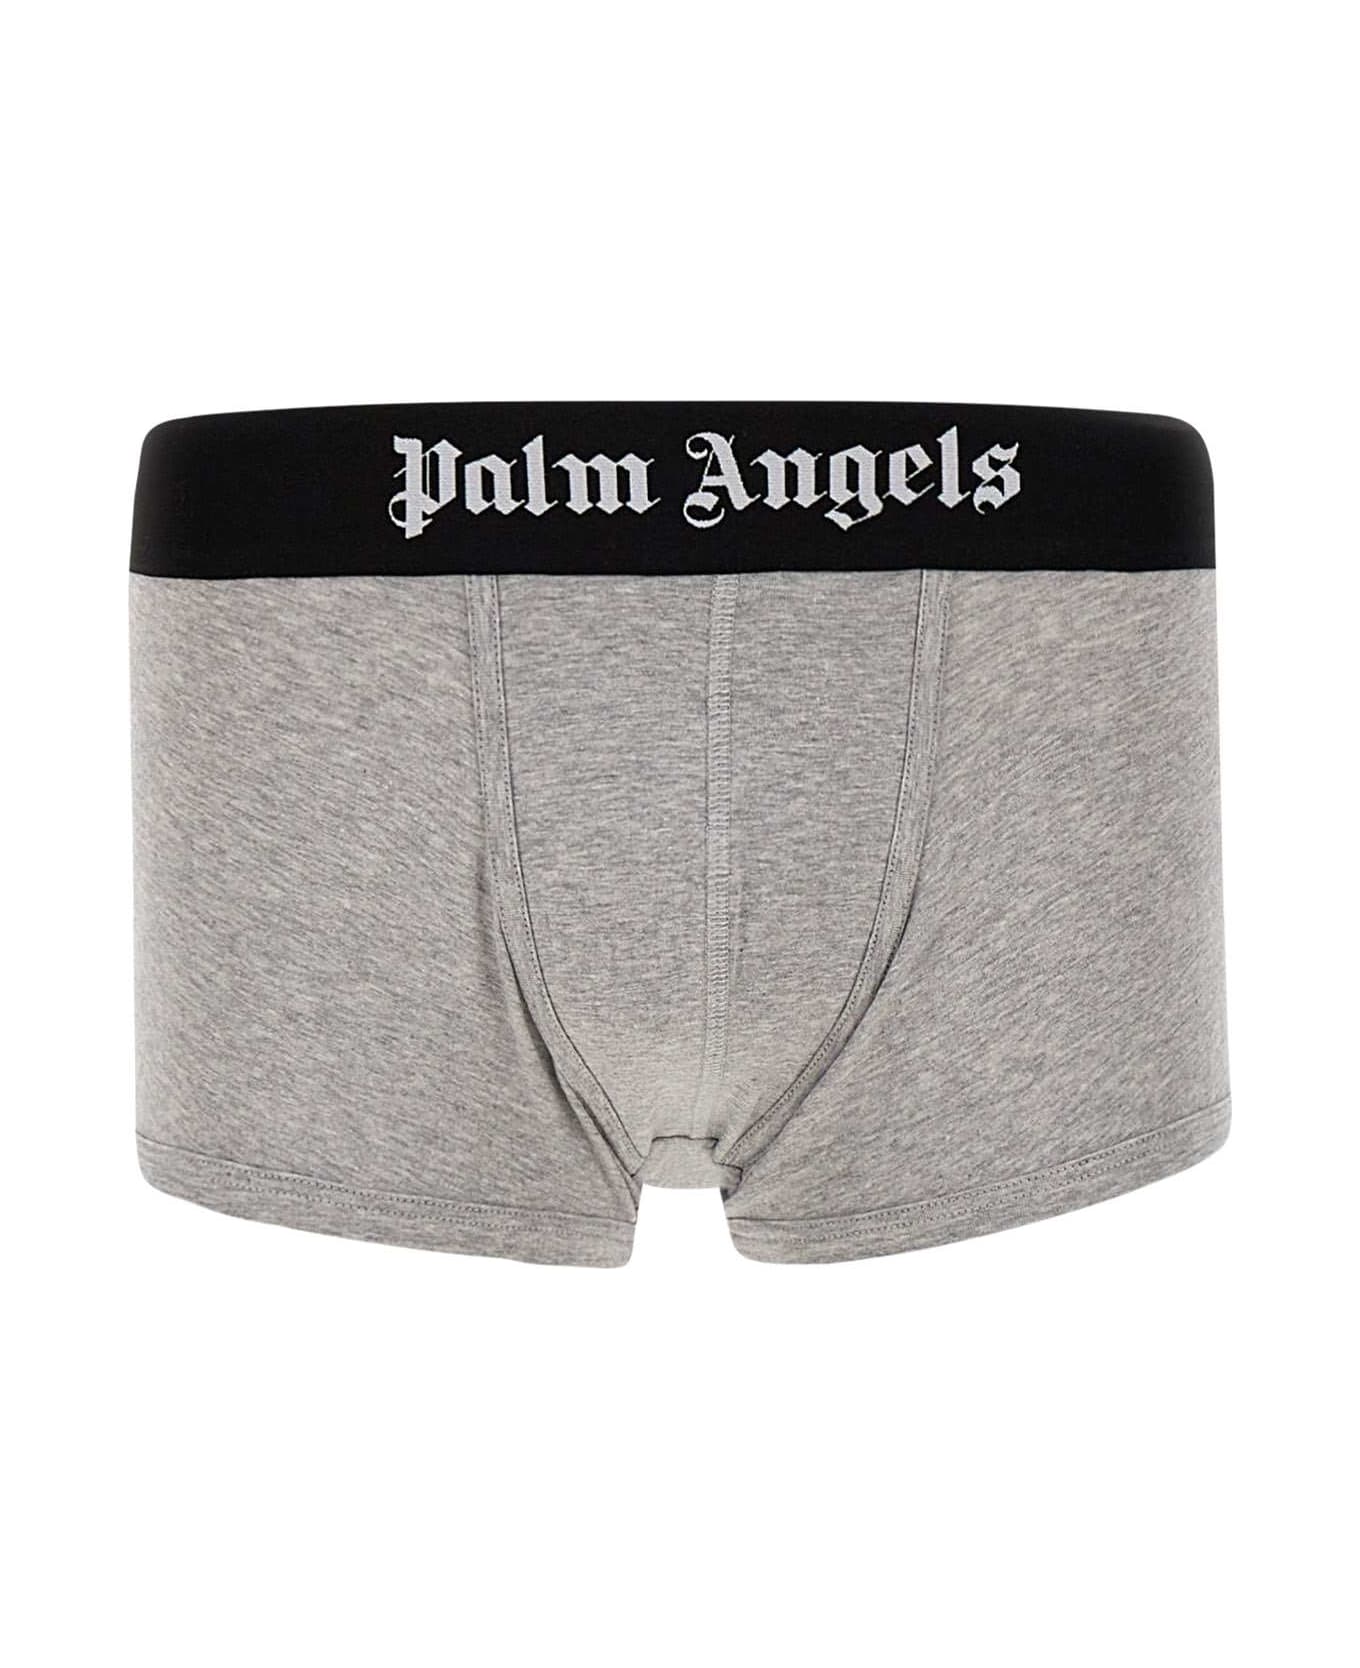 Palm Angels Cotton Boxer Shorts - Multicolor ショーツ